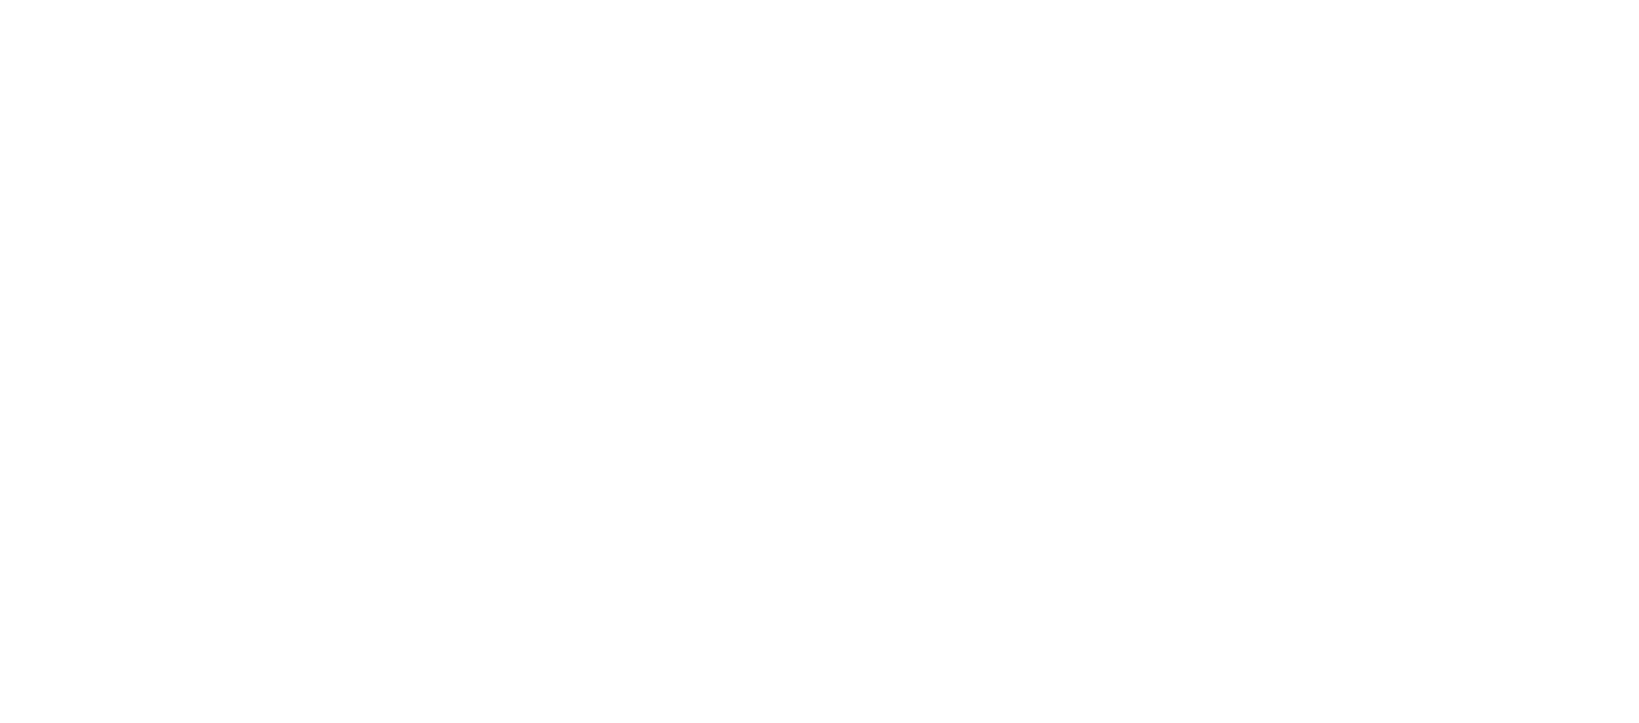 ITZ-Logo